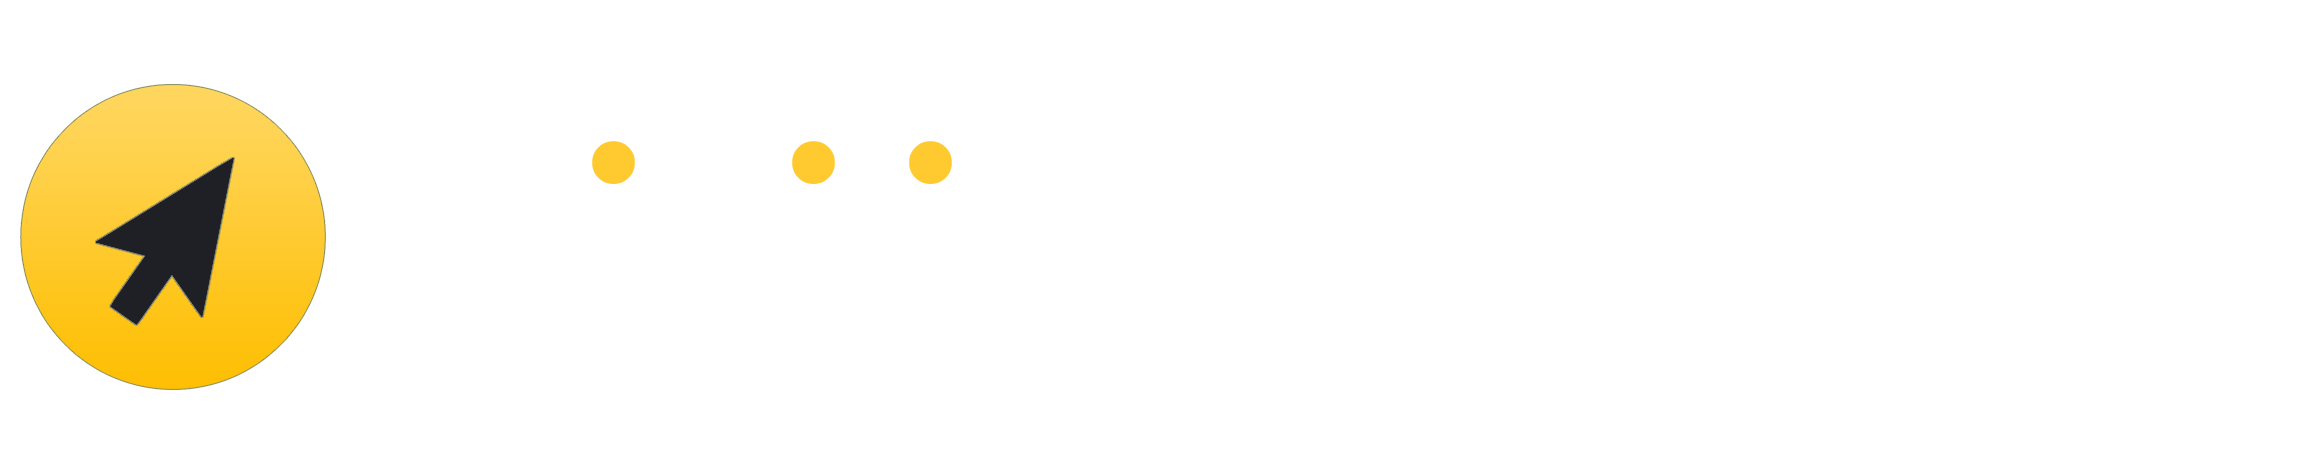 Minilinks.net